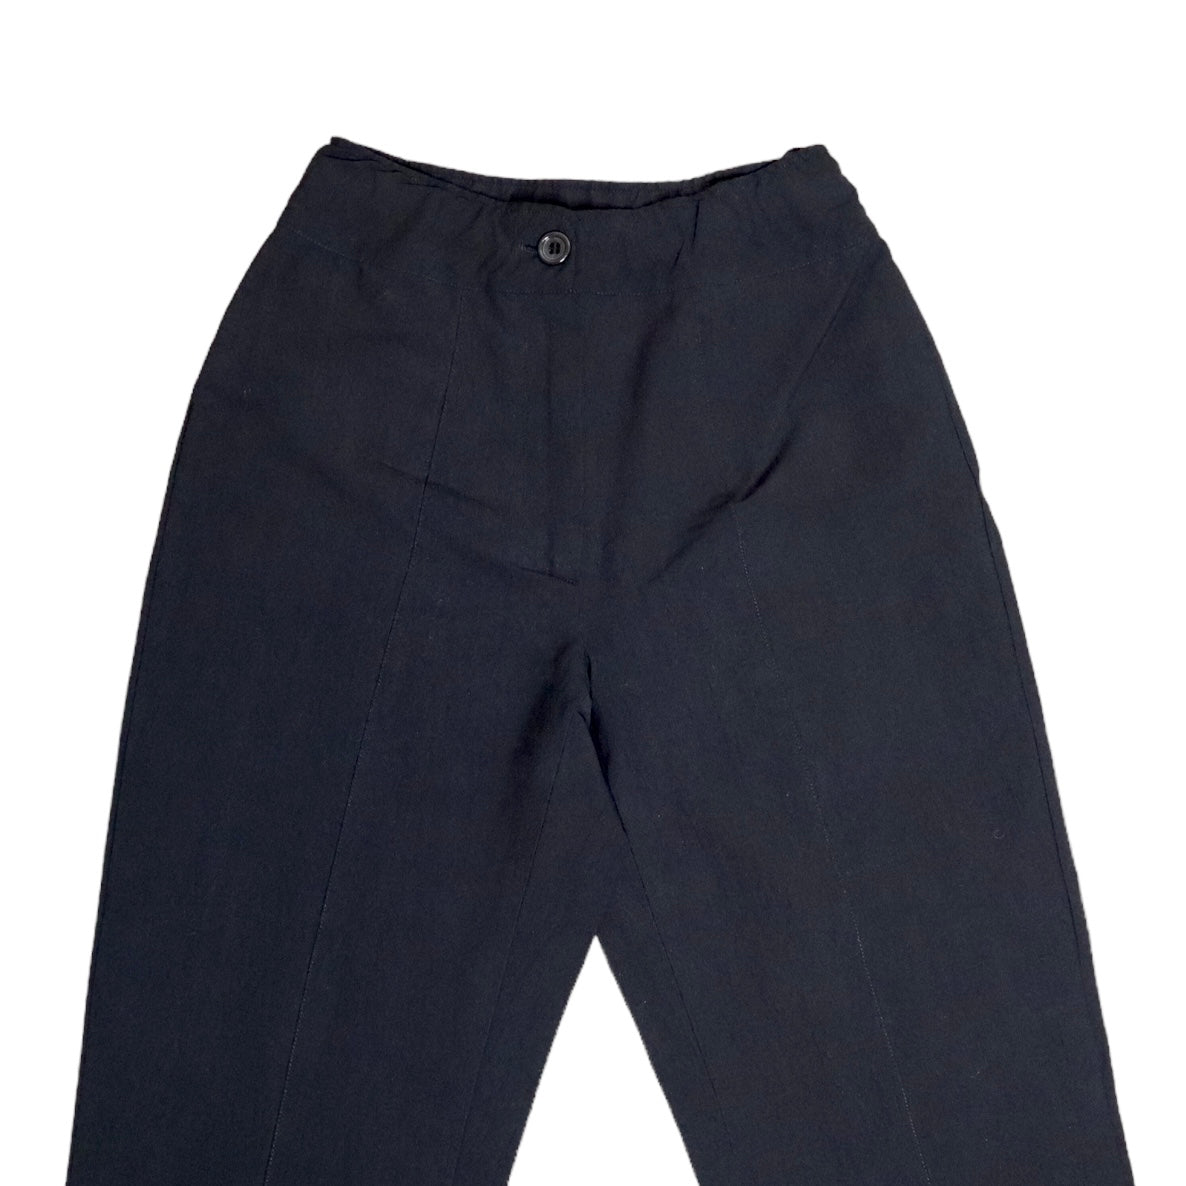 90s JIL SANDER Black High Waisted Pants (XS)